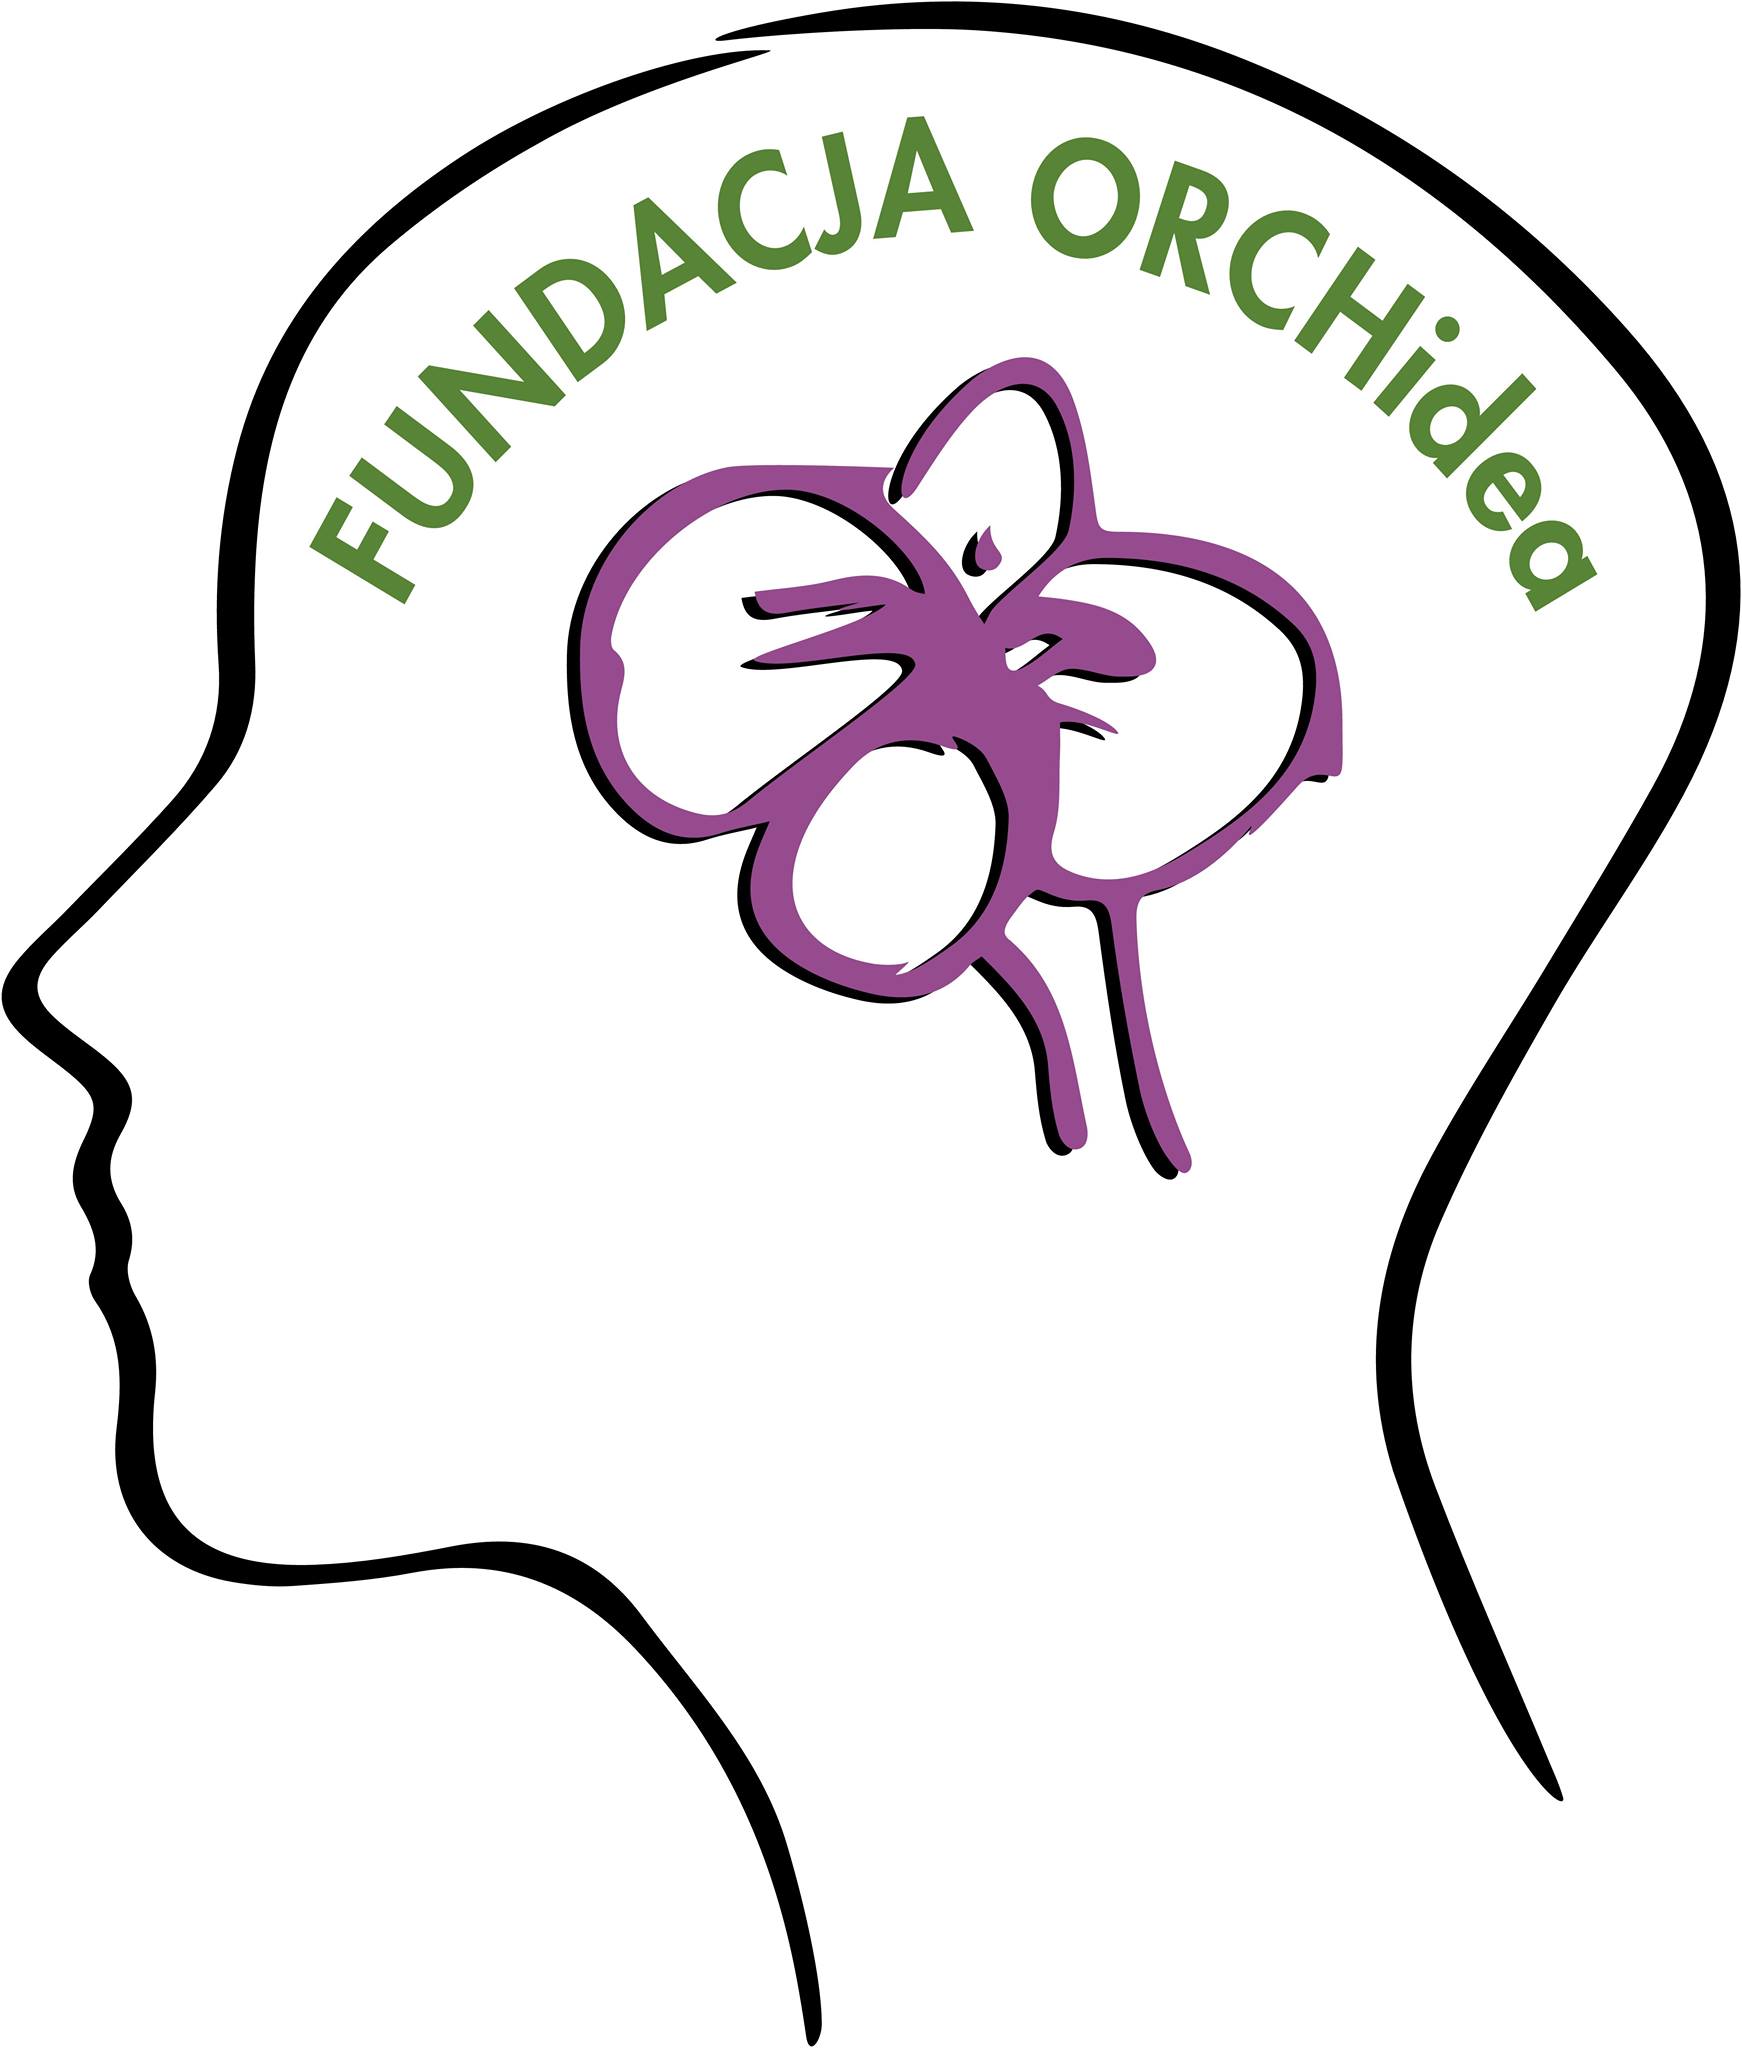 Fundacja ORCHidea